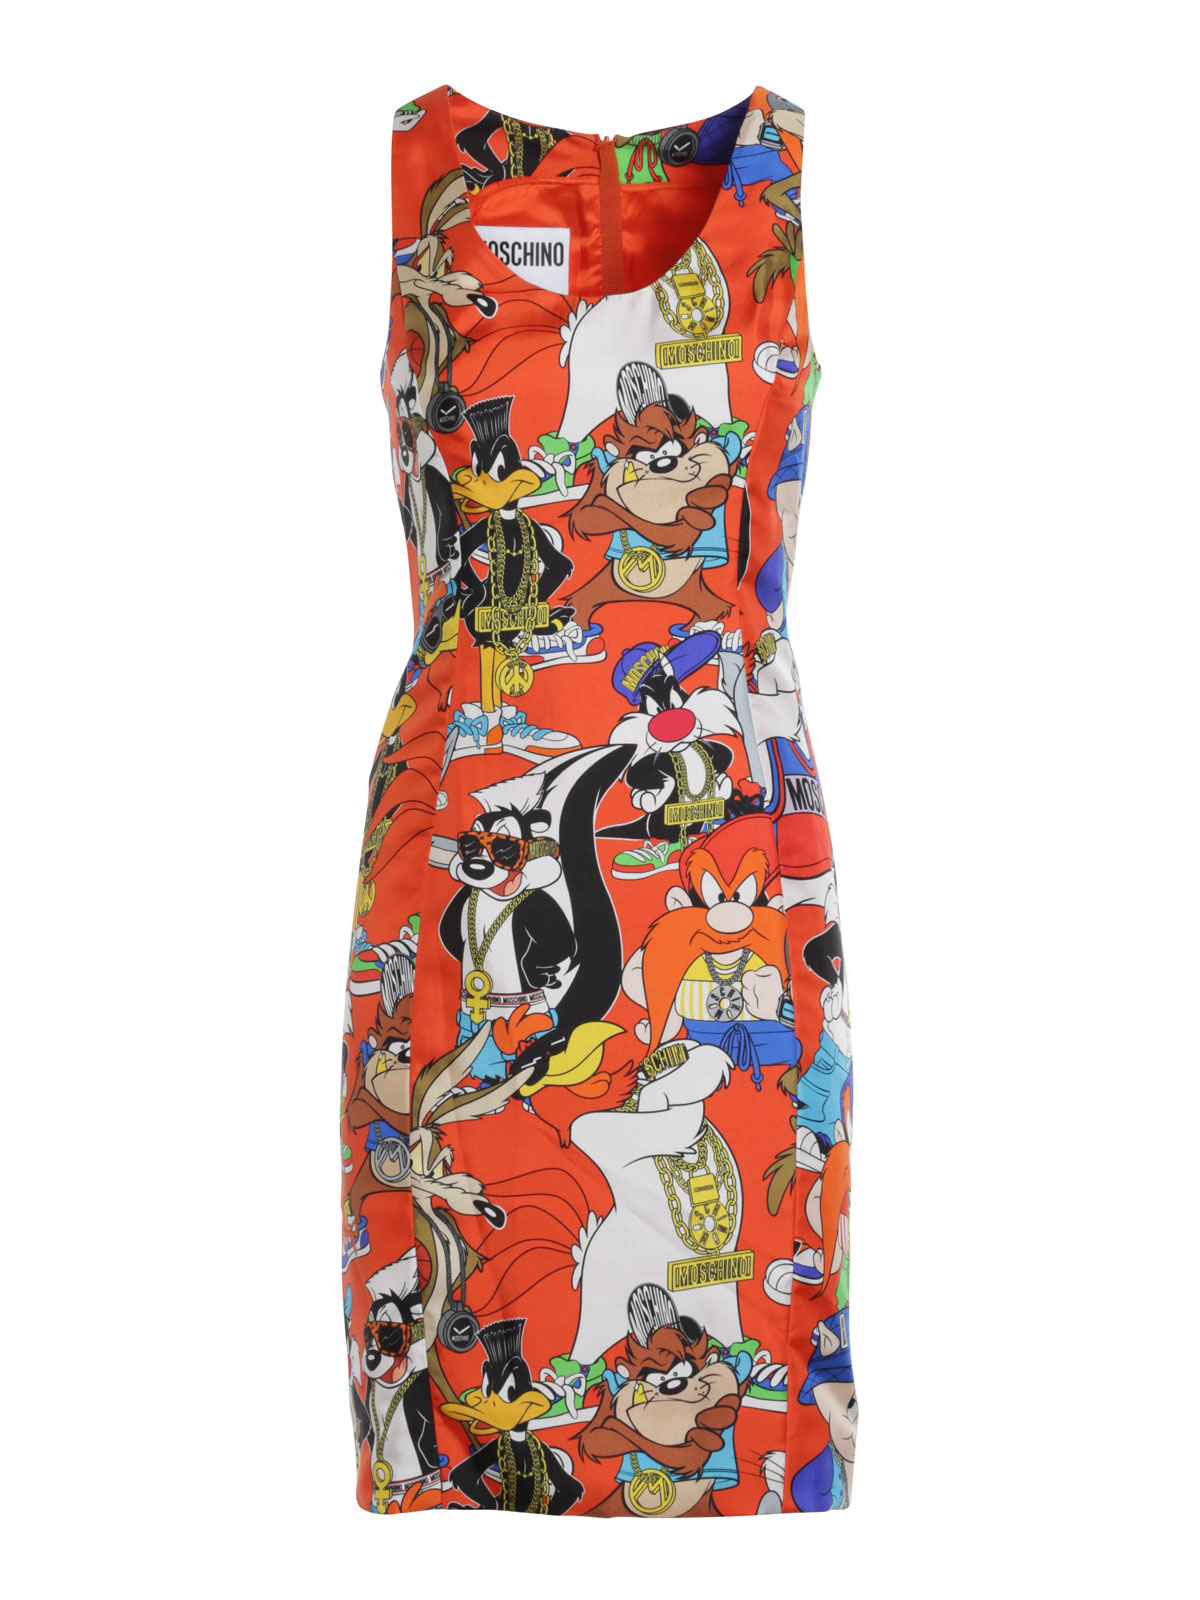 Moschino Looney Tunes Dress Clearance | website.jkuat.ac.ke